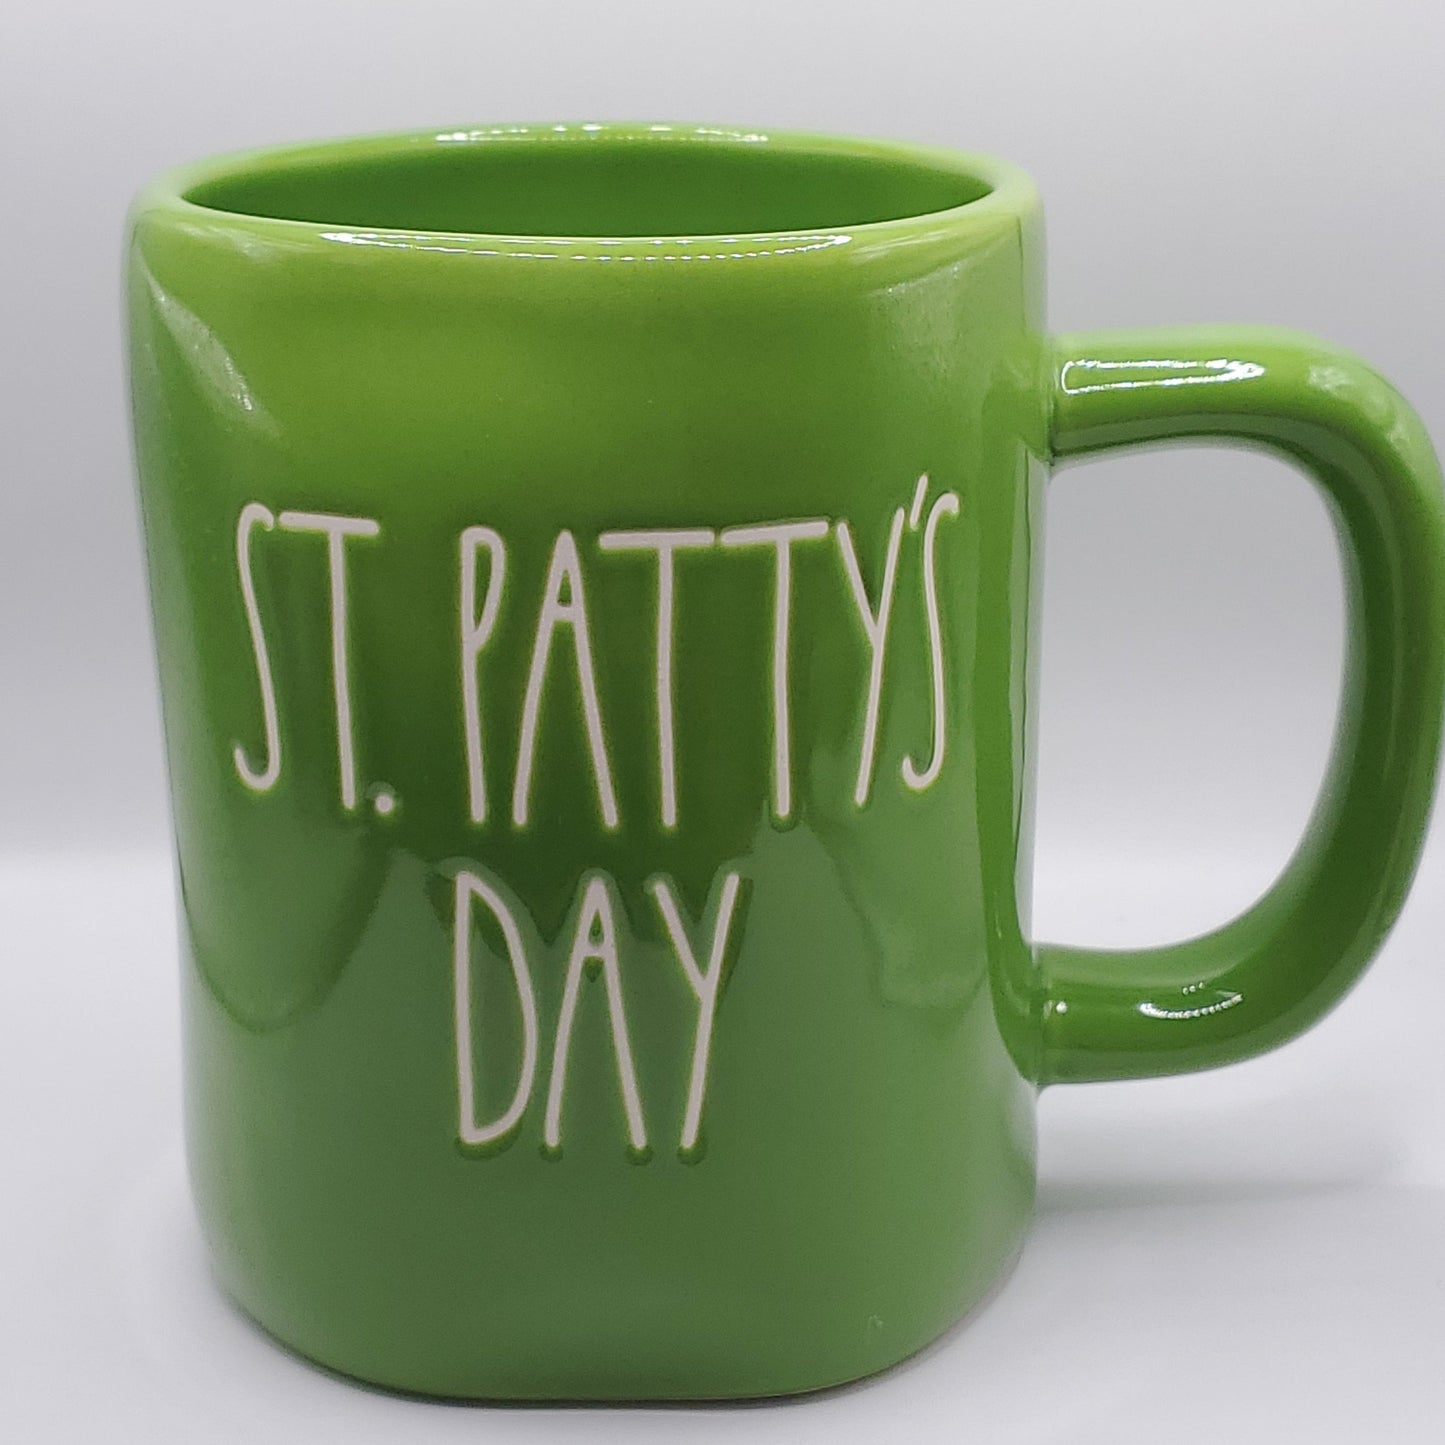 Rae Dunn St. Patty's Day Mug